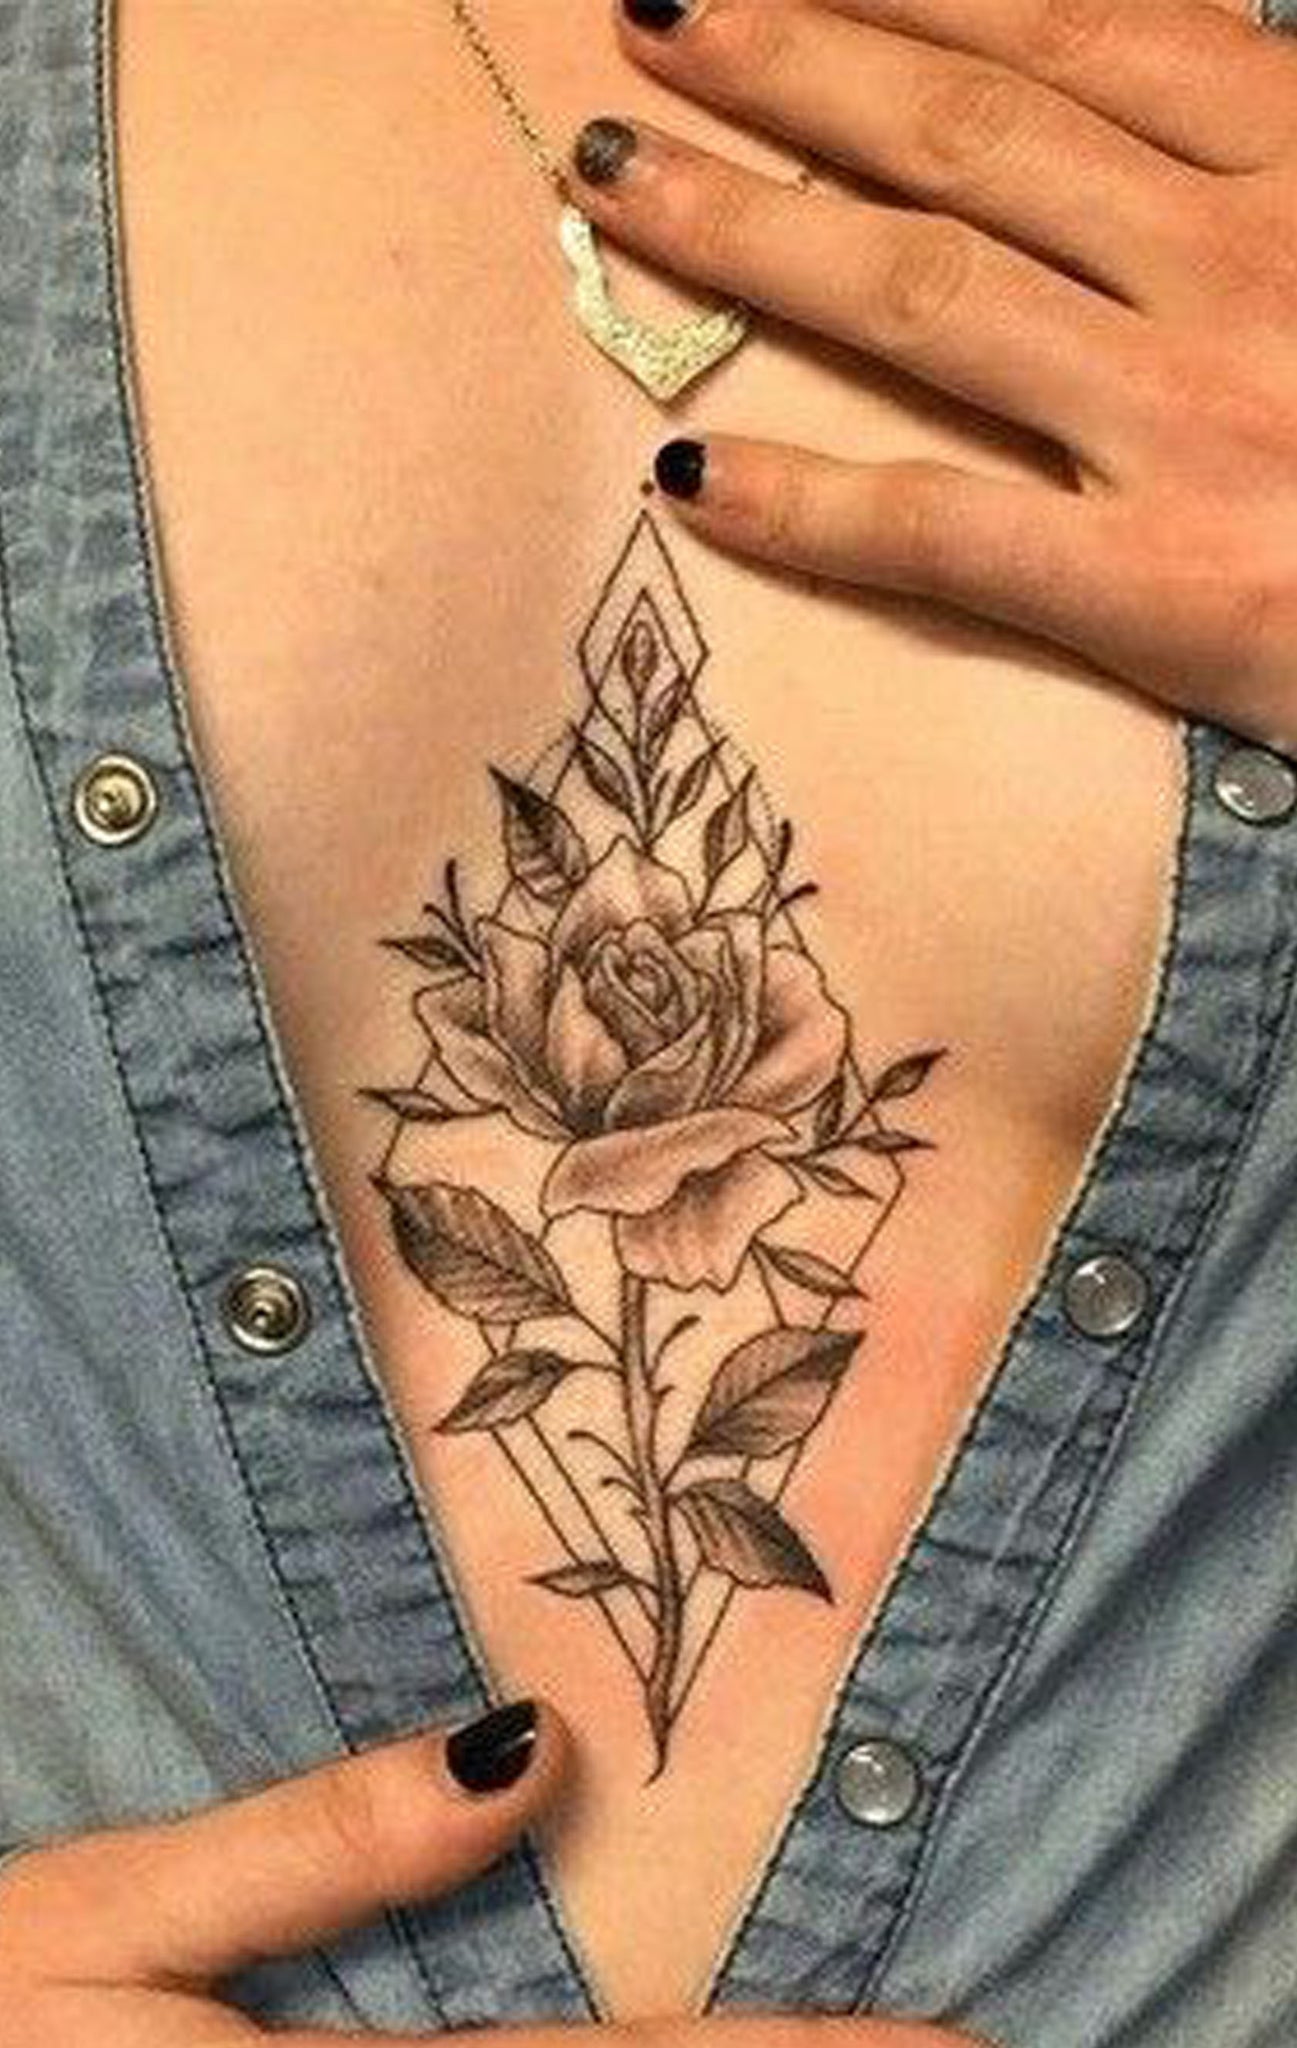 Vintage Wild Rose Sternum Tattoo Ideas for Women - Delicate Black Floral Flower Chest Tat -  ideas de tatuaje de esternón rosa para mujeres - www.MyBodiArt.com #tattoos